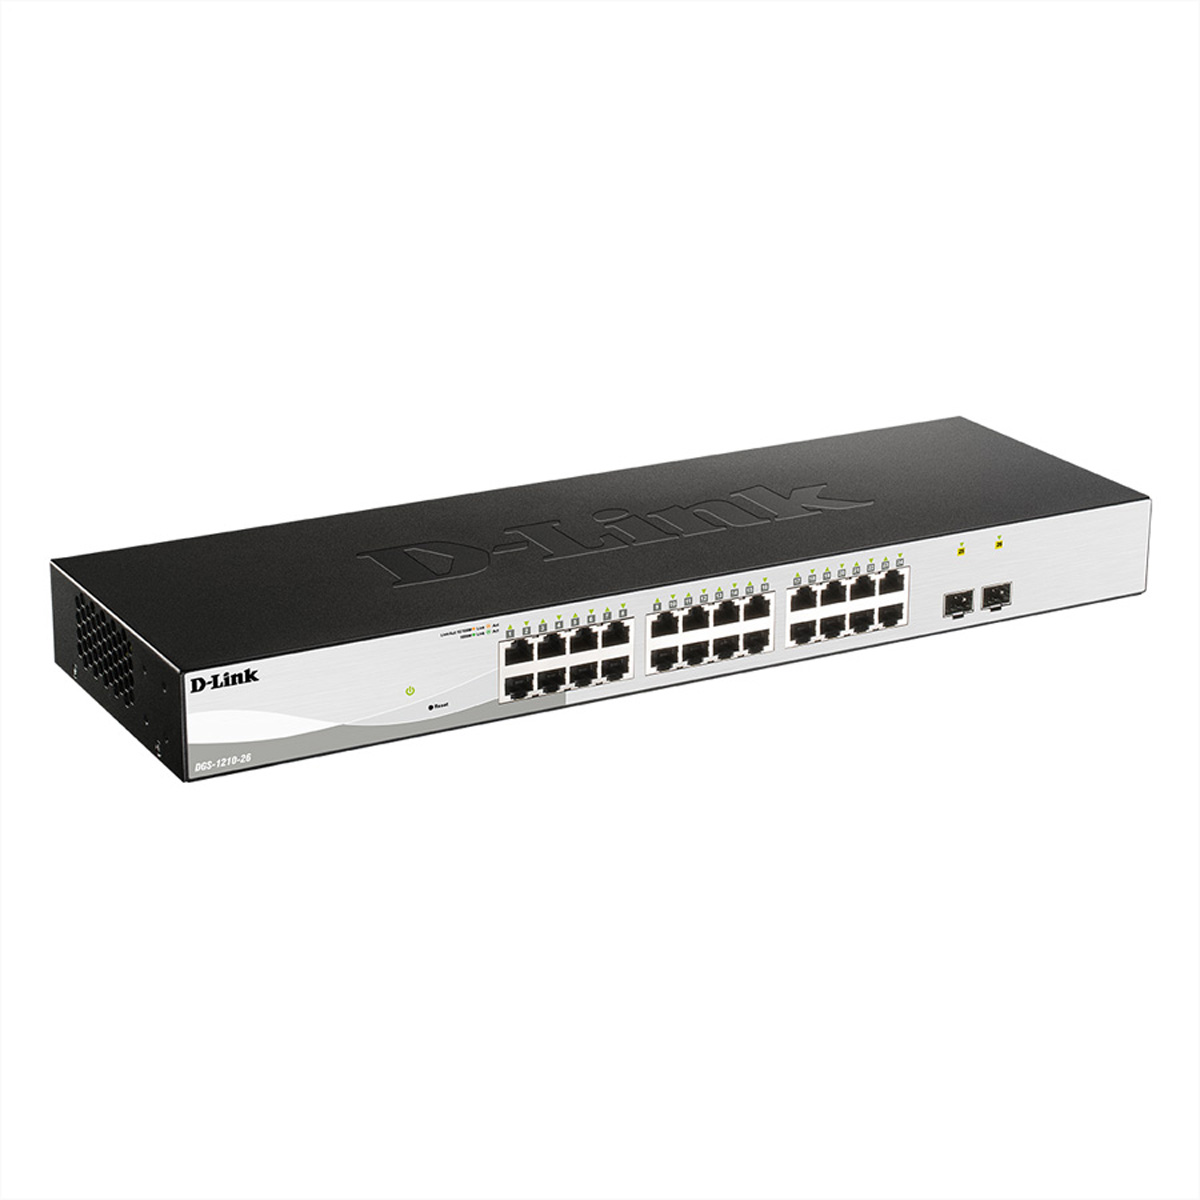 D-LINK DGS-1210-26 26-Port Gigabit Switch Managed Switch Ethernet Smart Gigabit Layer2